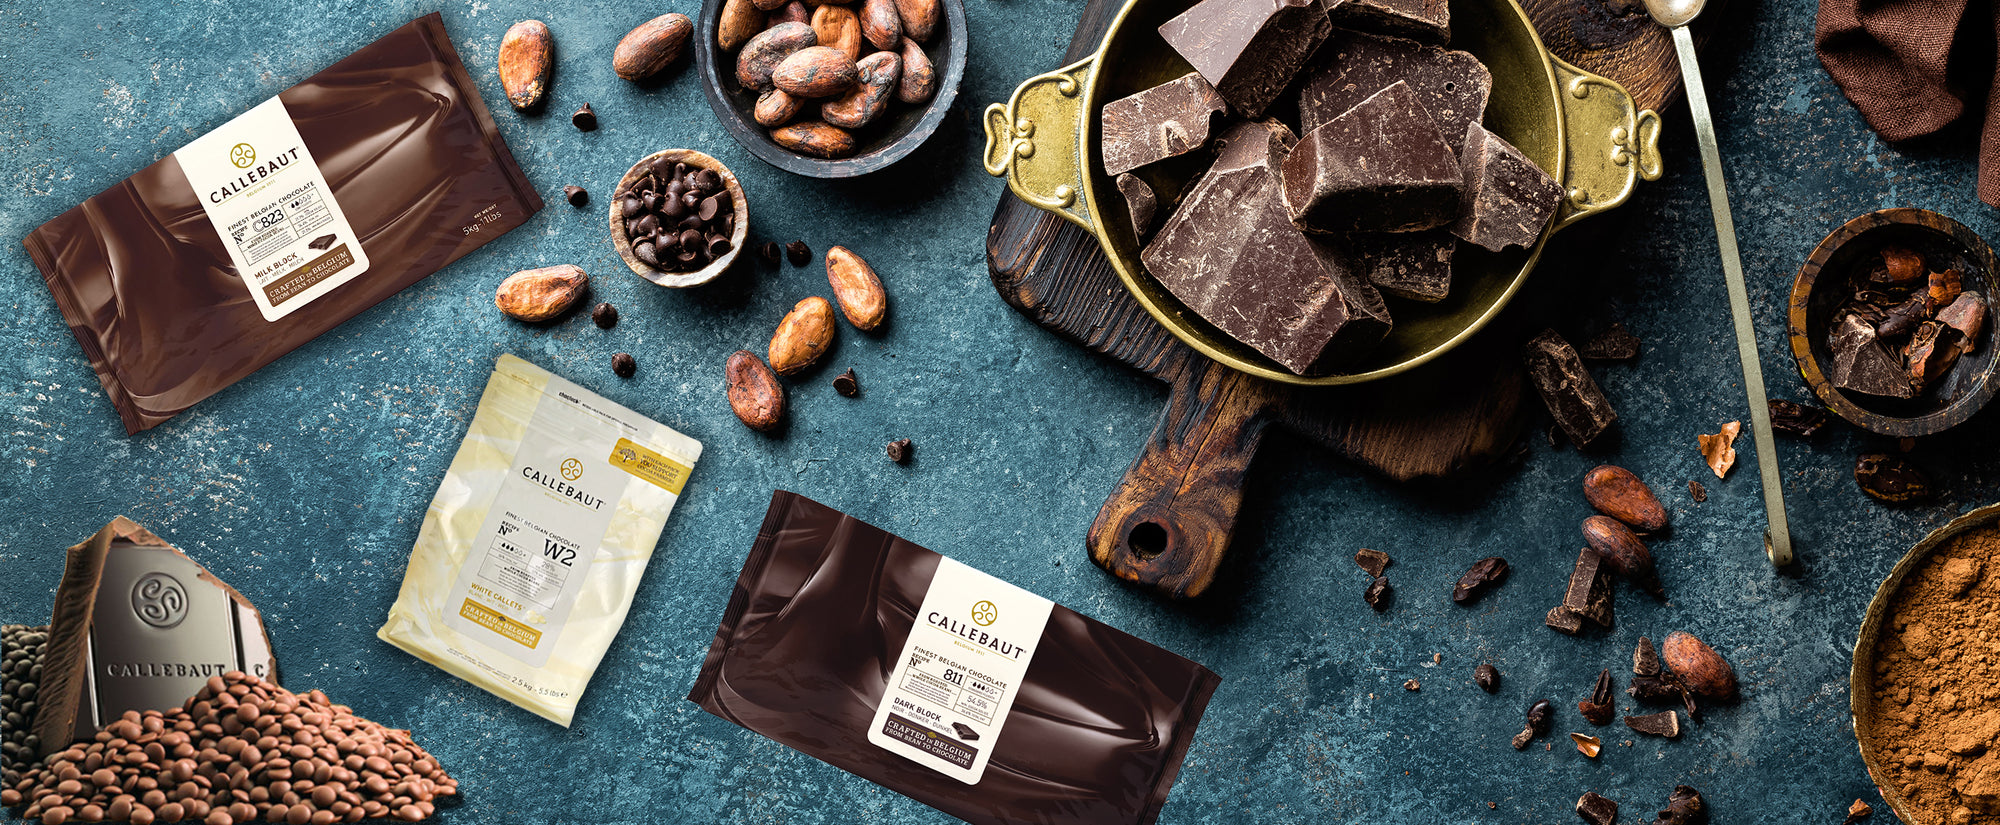 Callebaut No 811 Finest Belgian Dark Chocolate Callets Couverture 54.5% -  2.5Kg